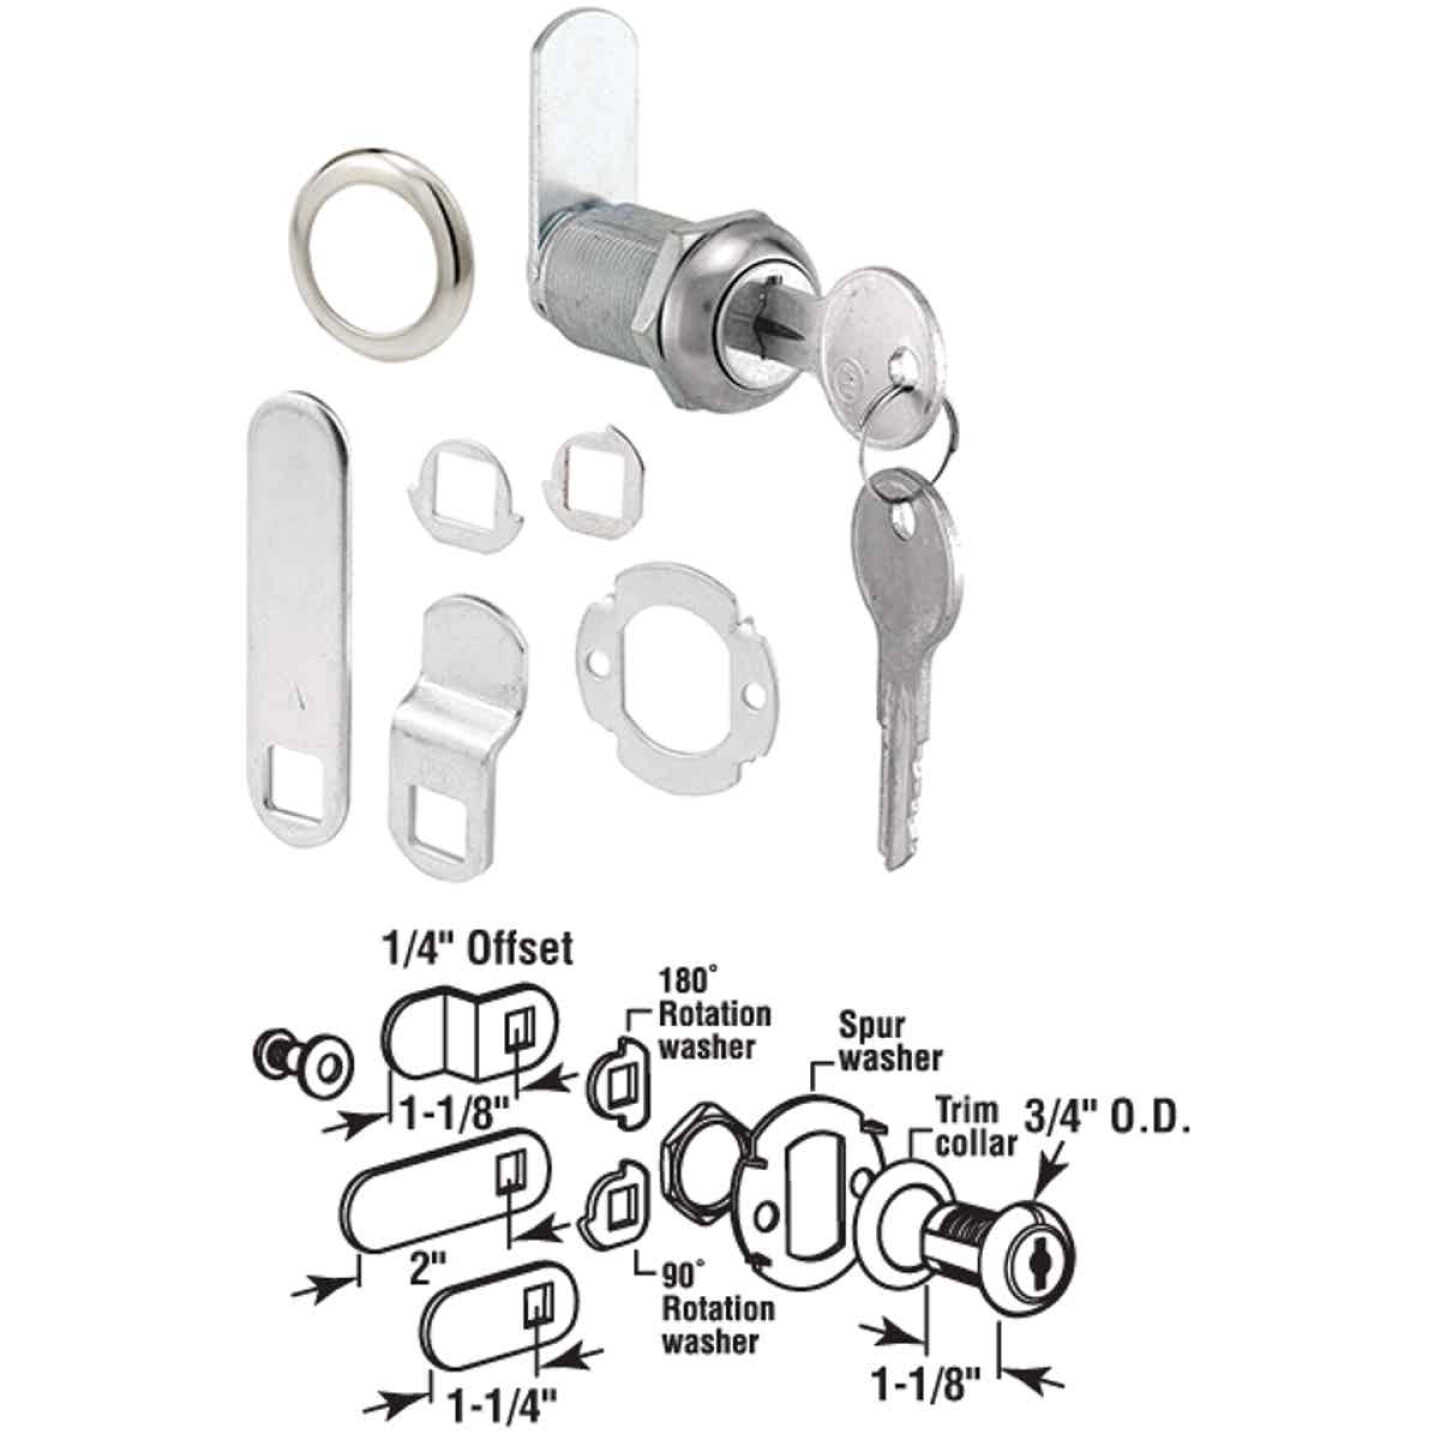 Keyed alike cabinet/drawer lock with 2 keys